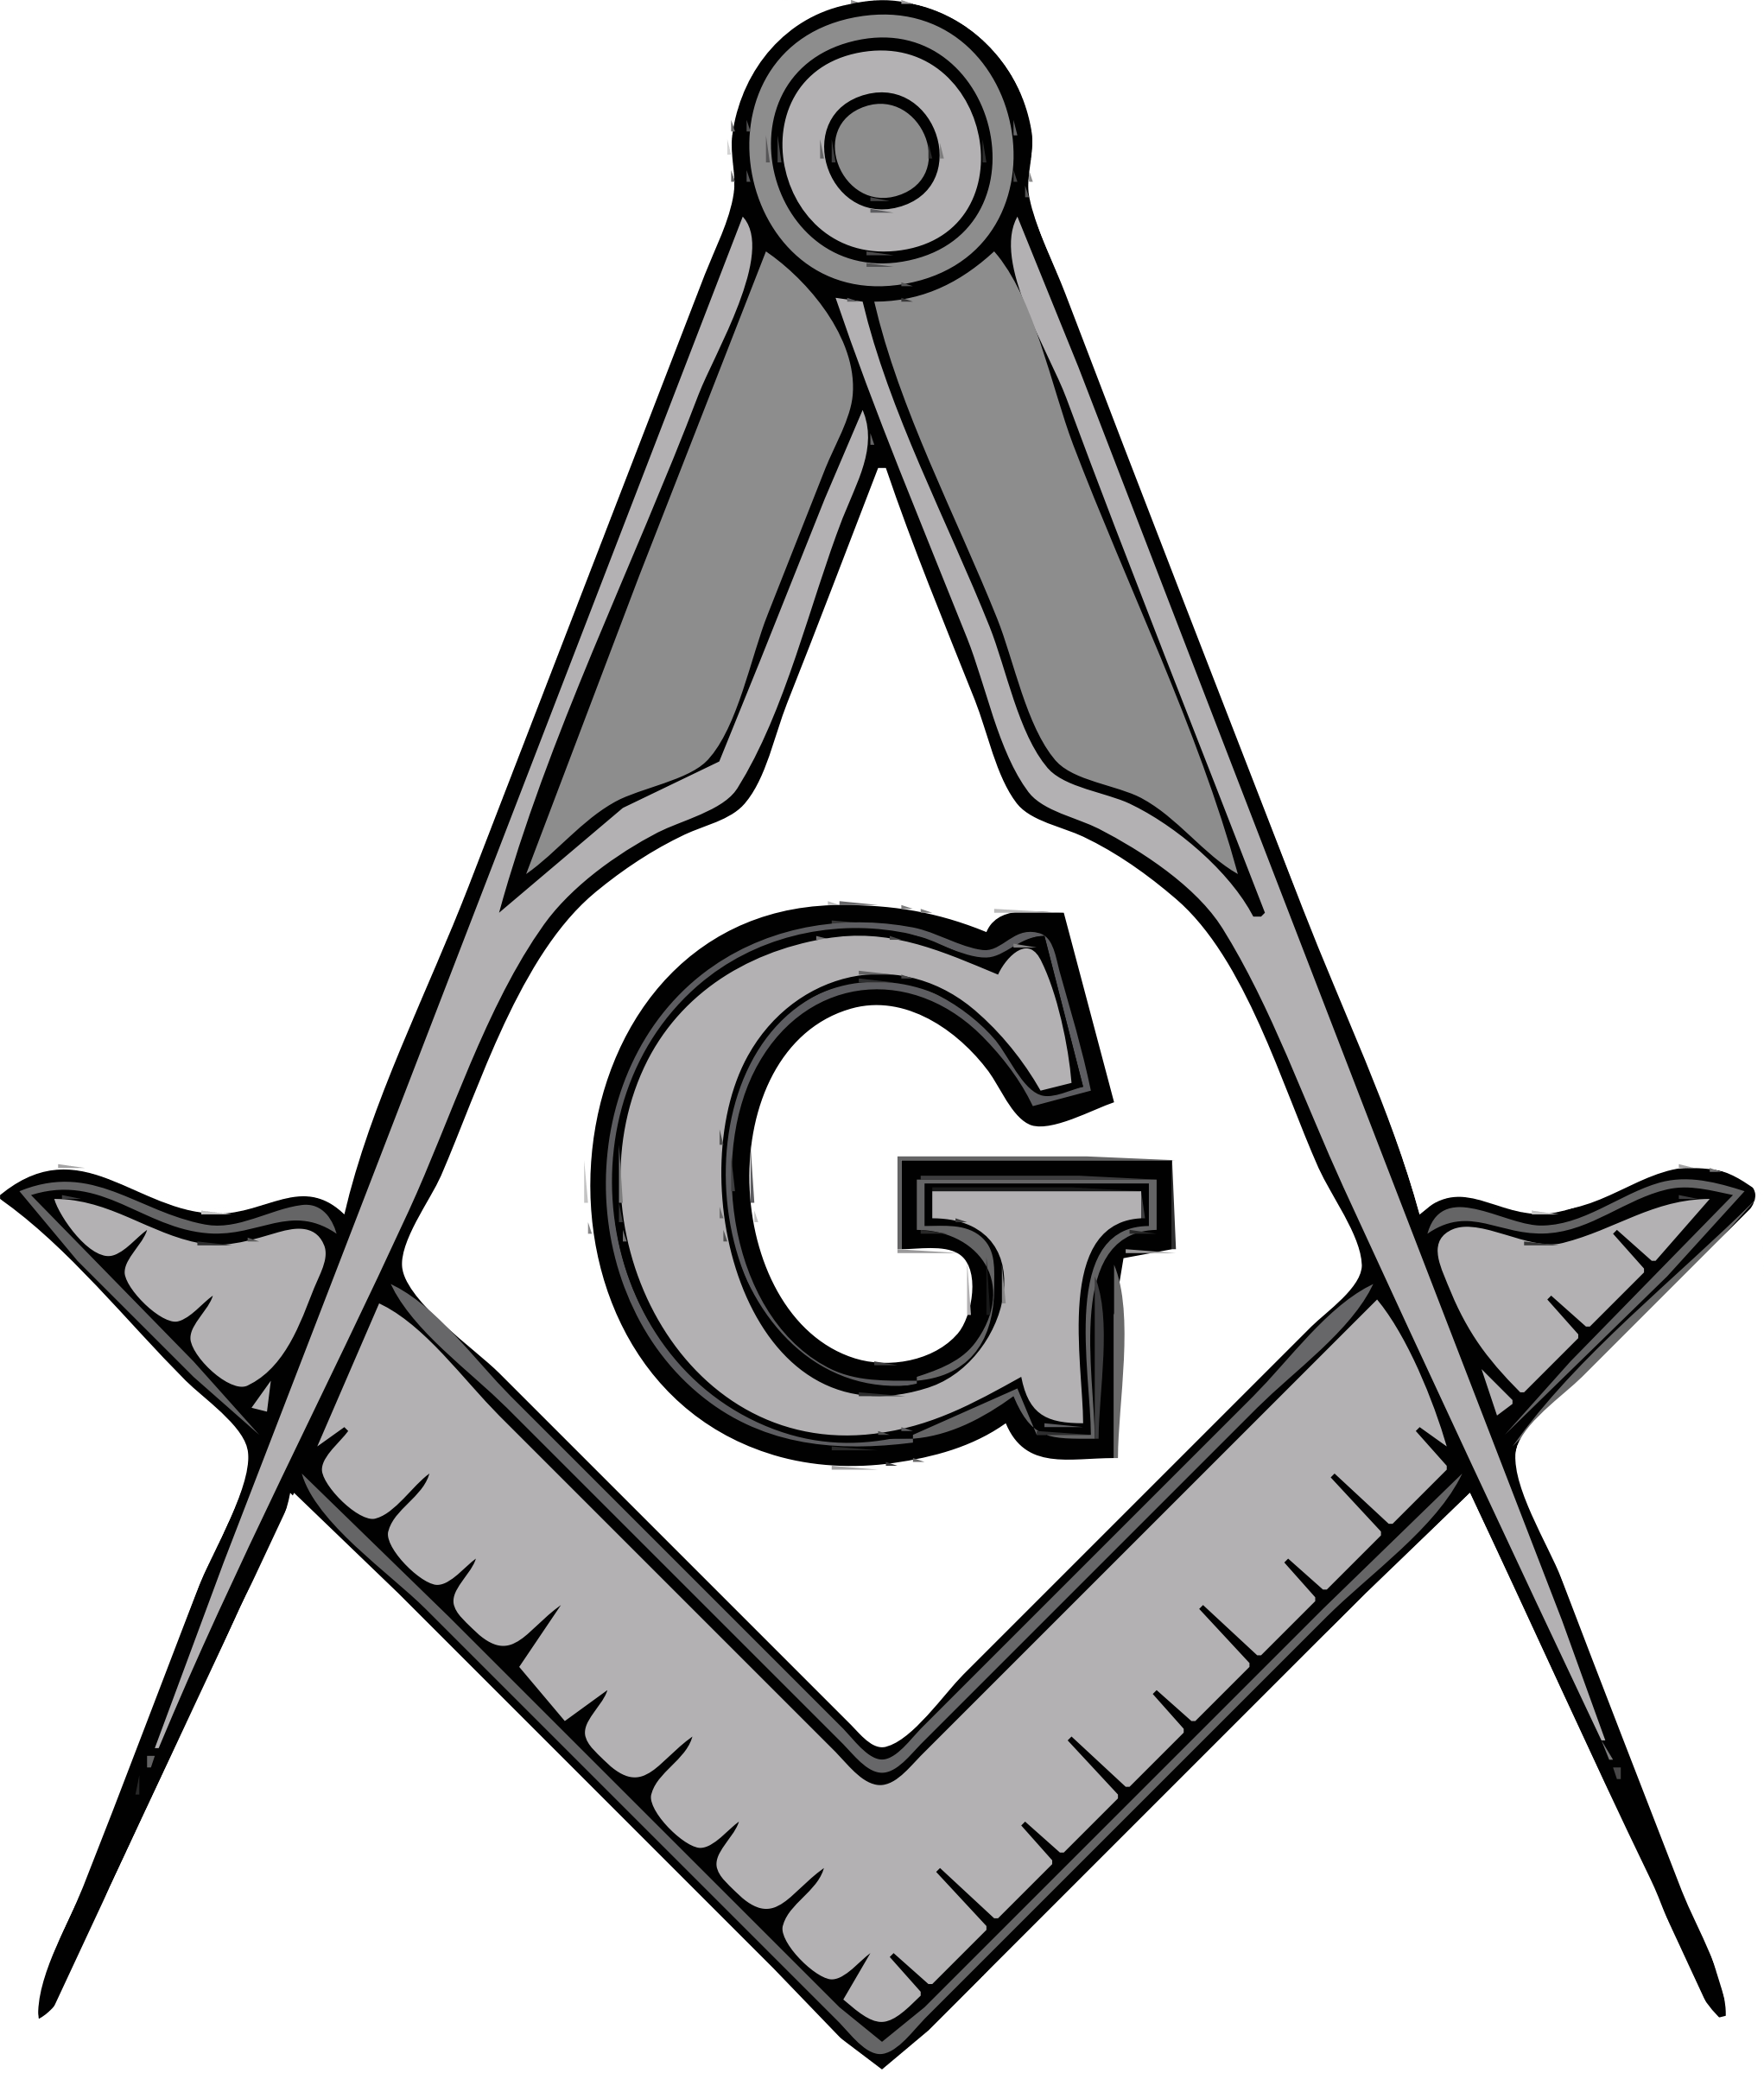 Blue Lodge Logo - Clipart, Freemasonry, Masonic Blue Lodge Logo